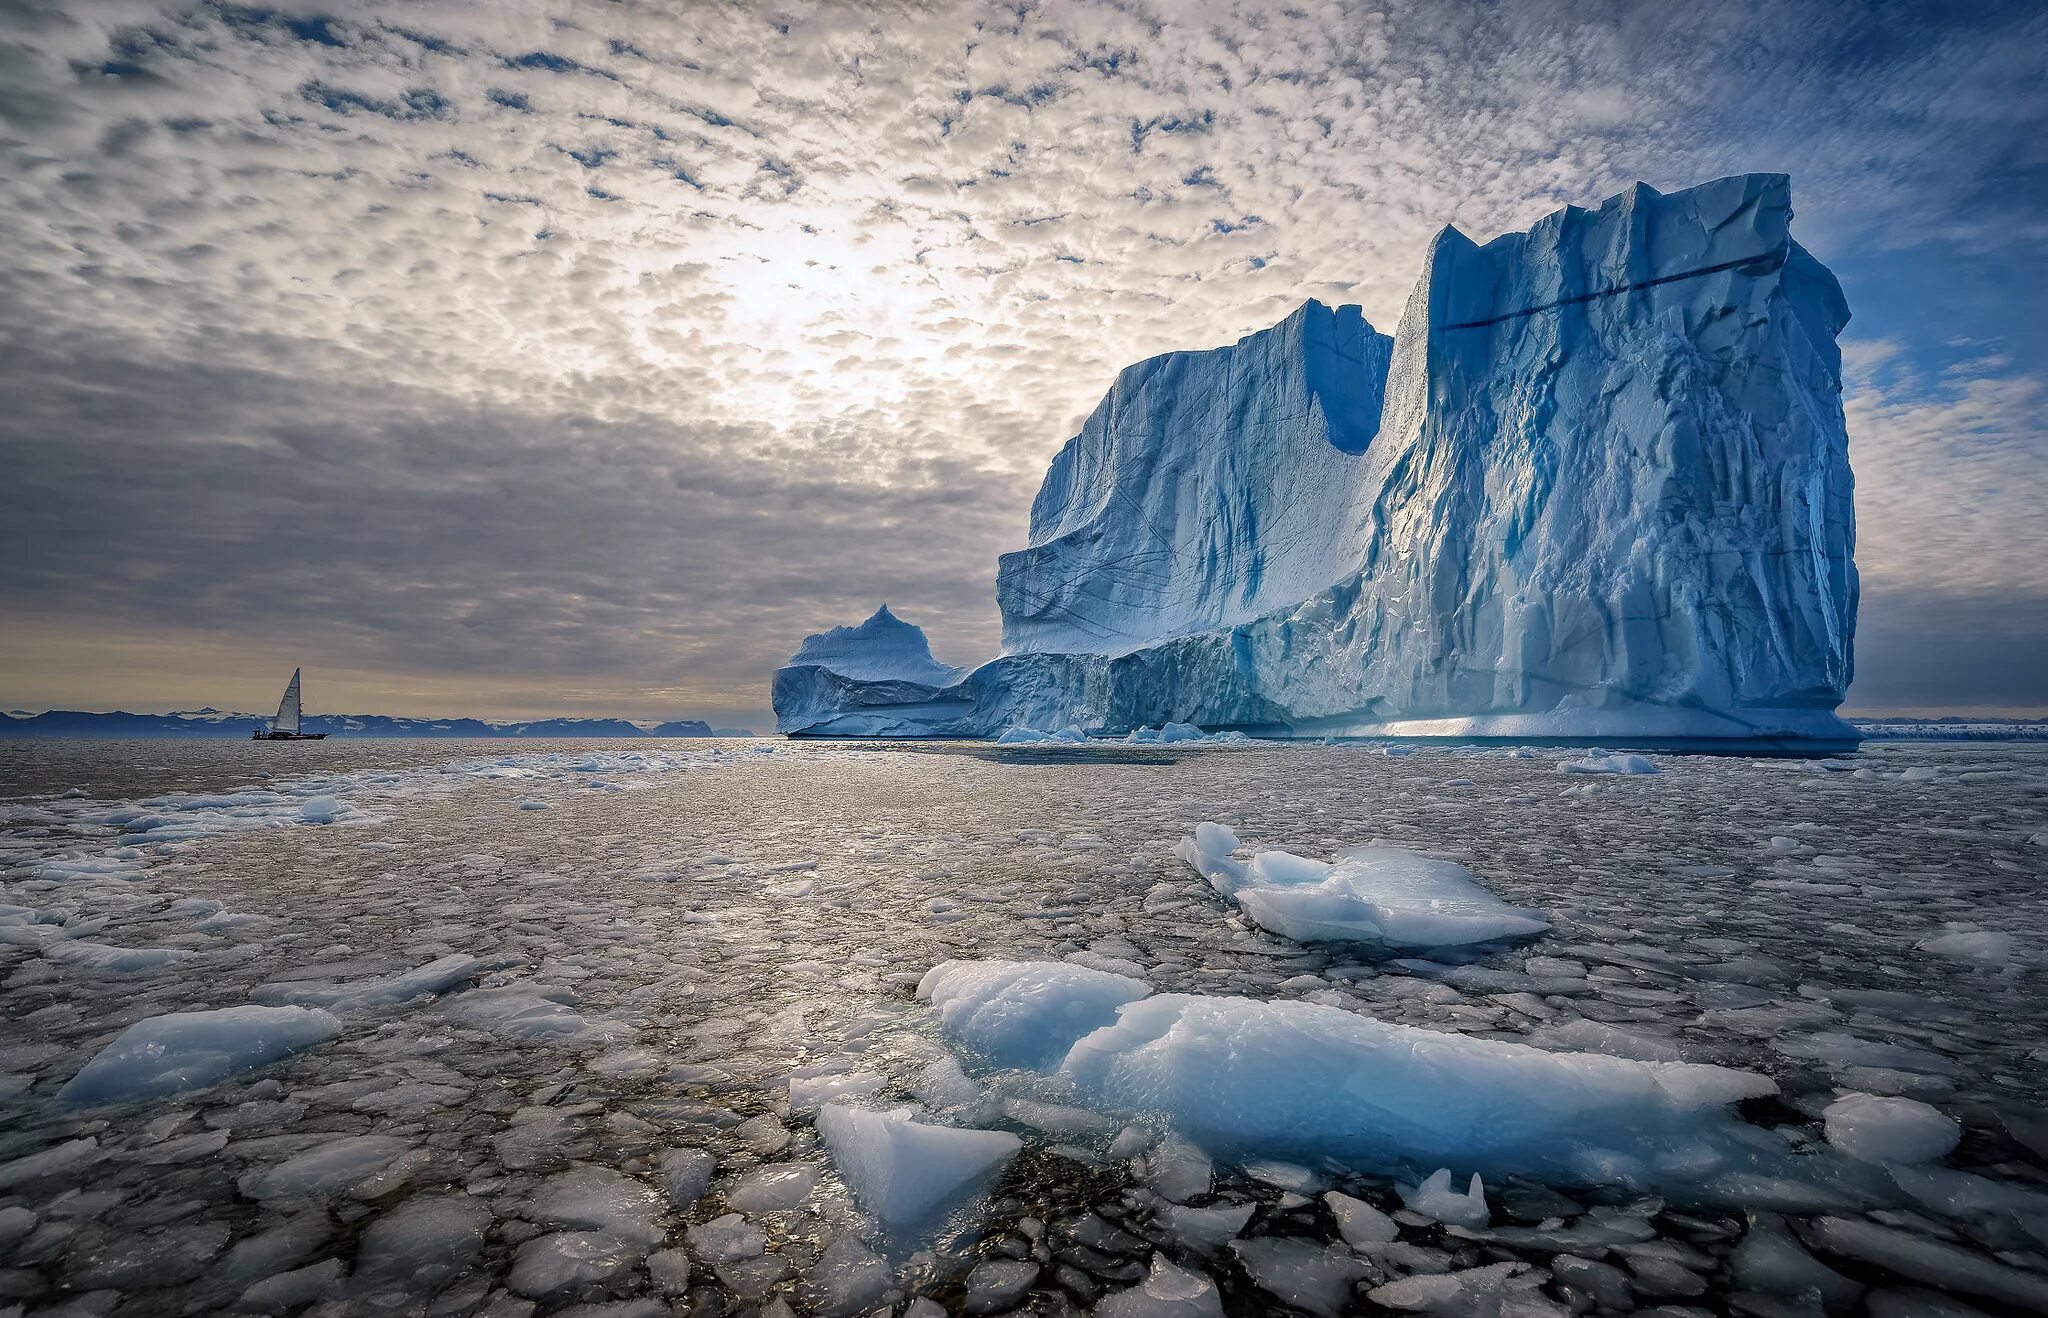 Как меняется природа арктических морей. Арктика Северный Ледовитый океан. Антарктида Гренландия Арктика Северный Ледовитый океан. Гренландия Северный Ледовитый океан. Ледовитый океан Айсберг.